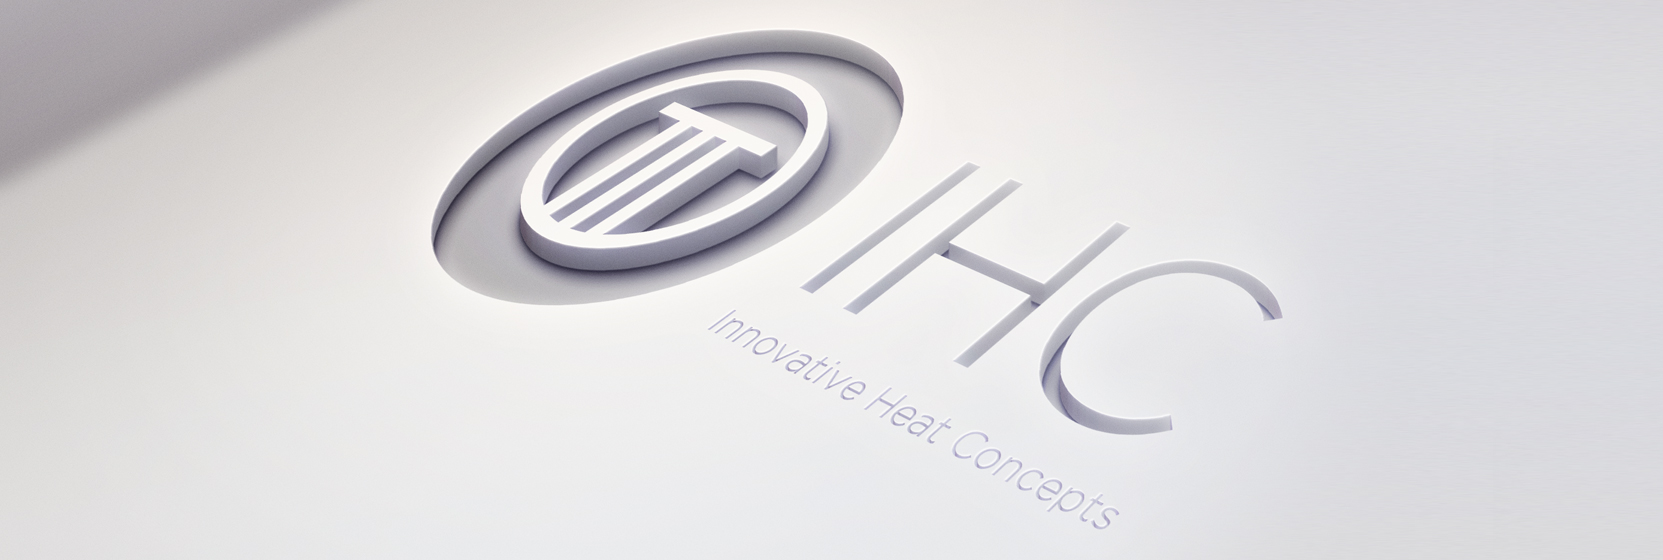 IHC_logo